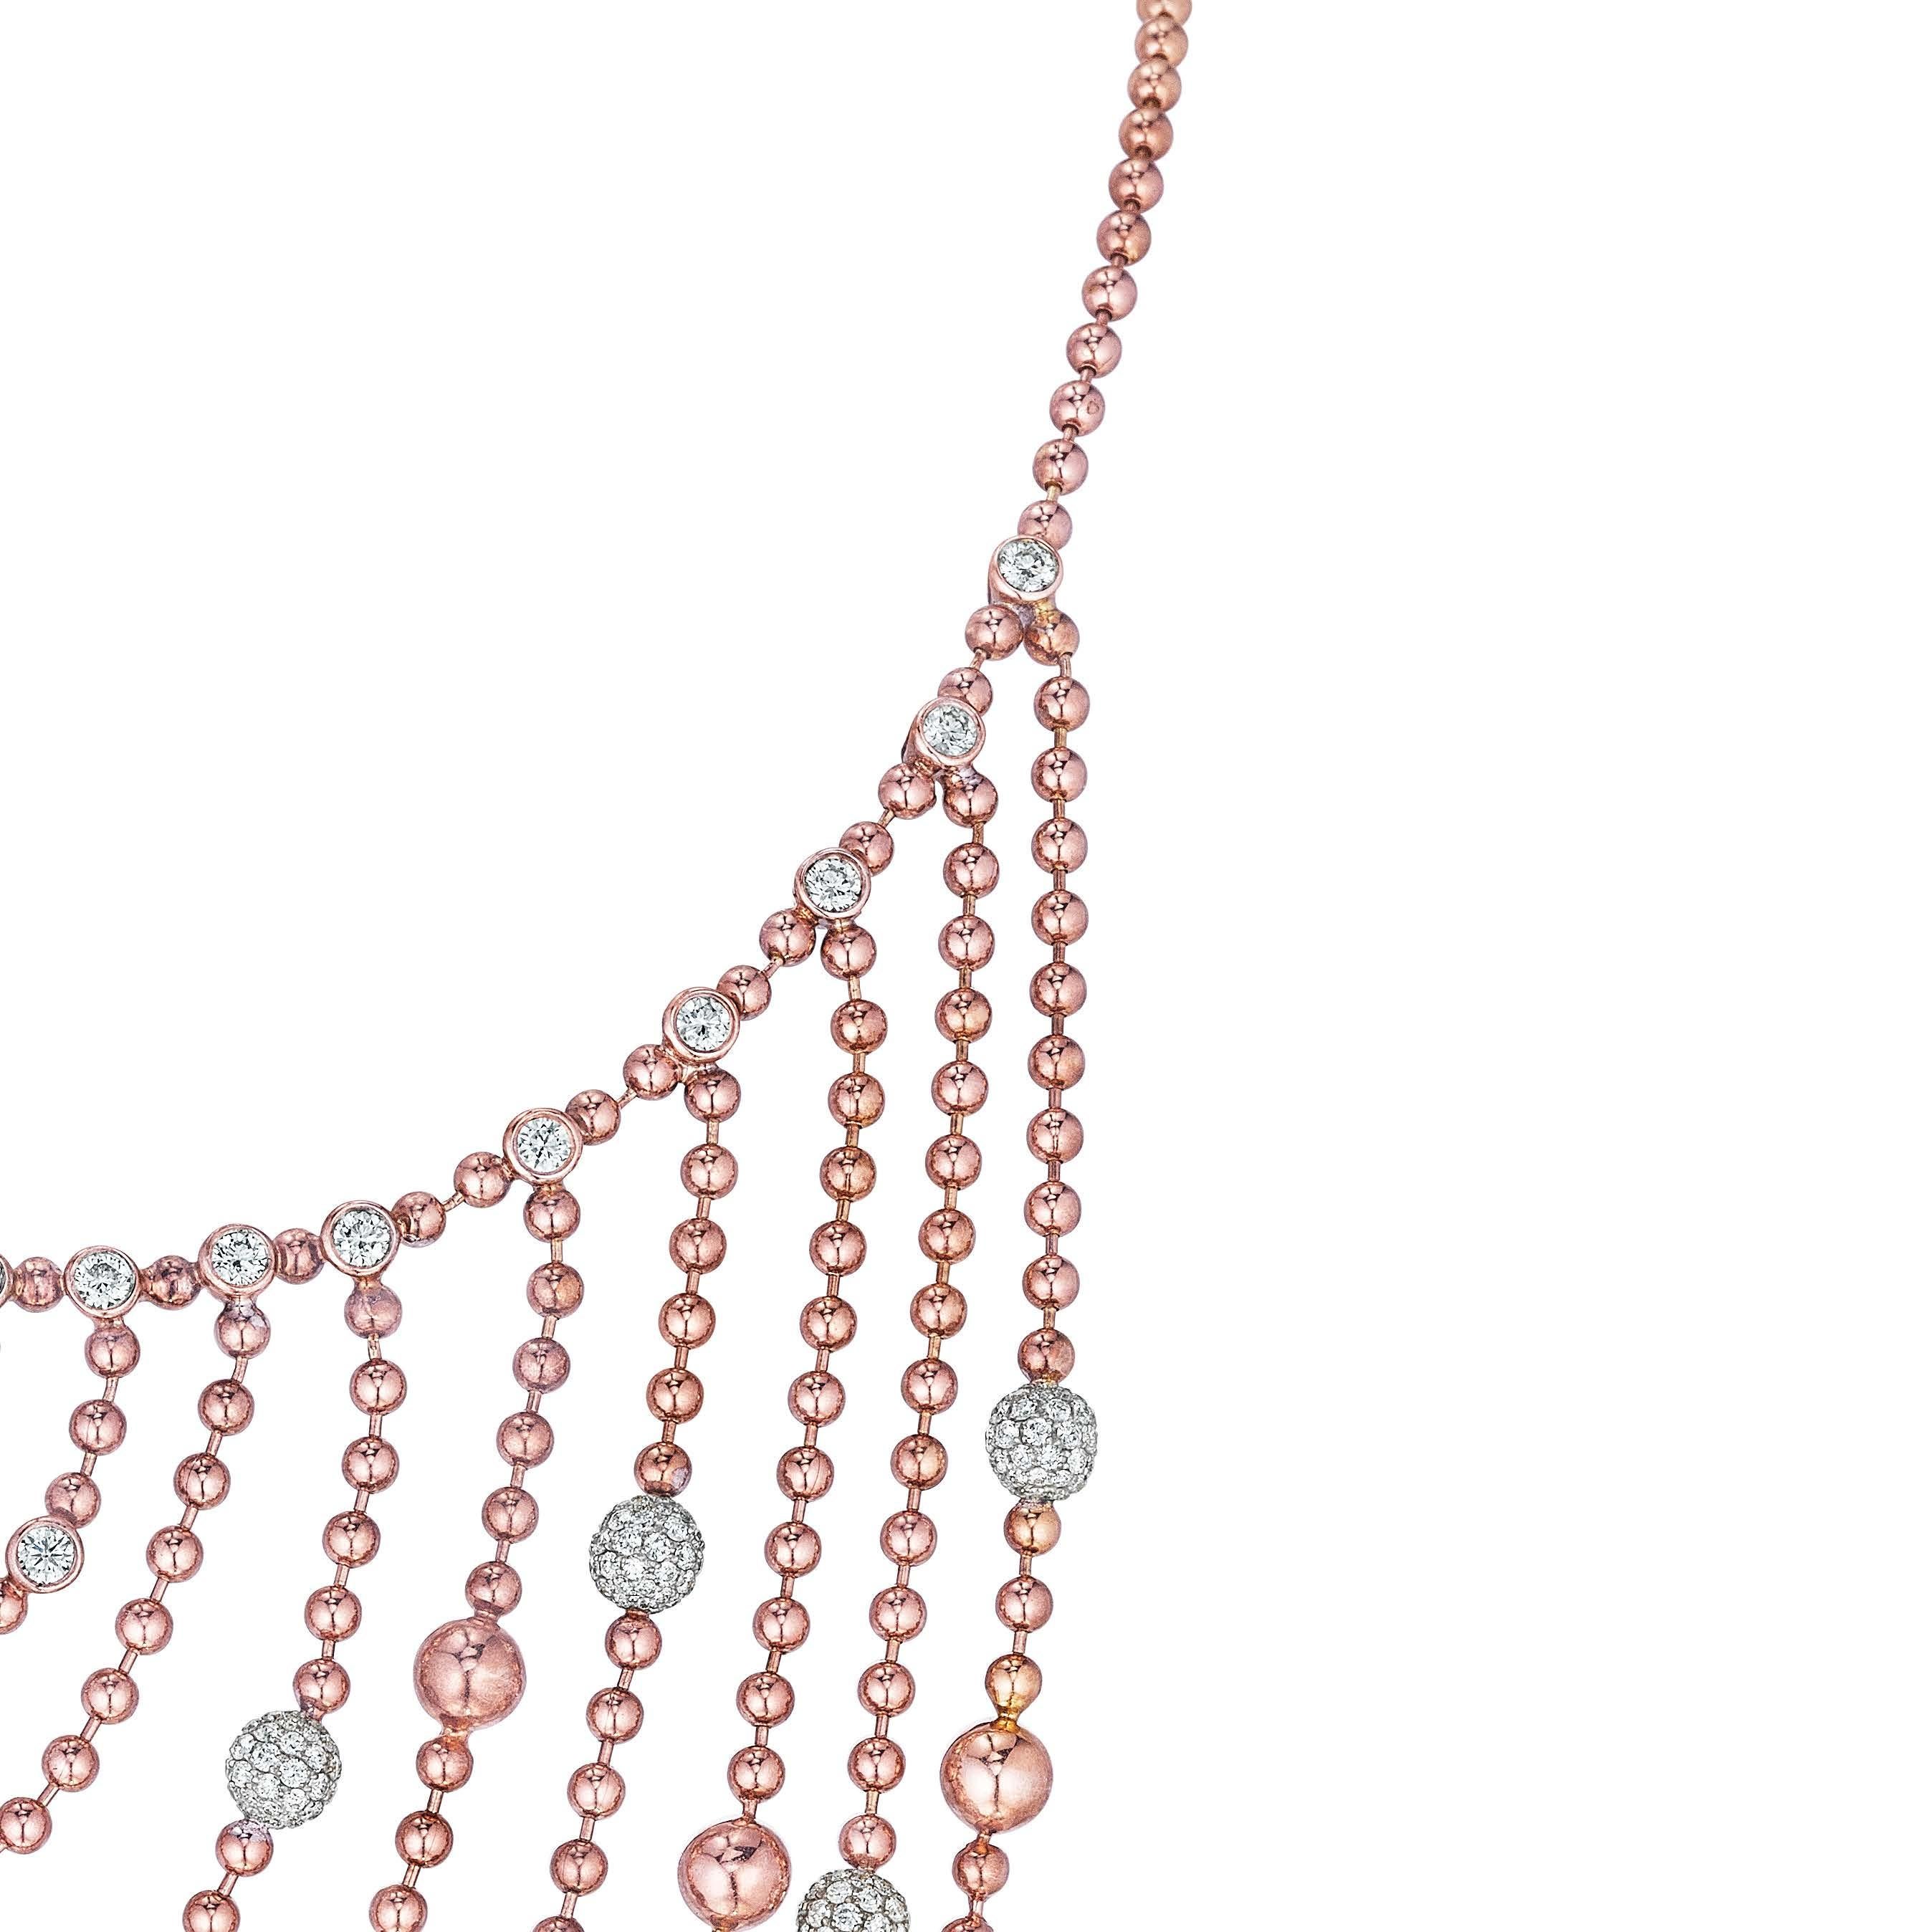 Multilayer Flapper Bib Necklace 7.48 Carat Diamond Necklace in 18 Karat Gold For Sale 1